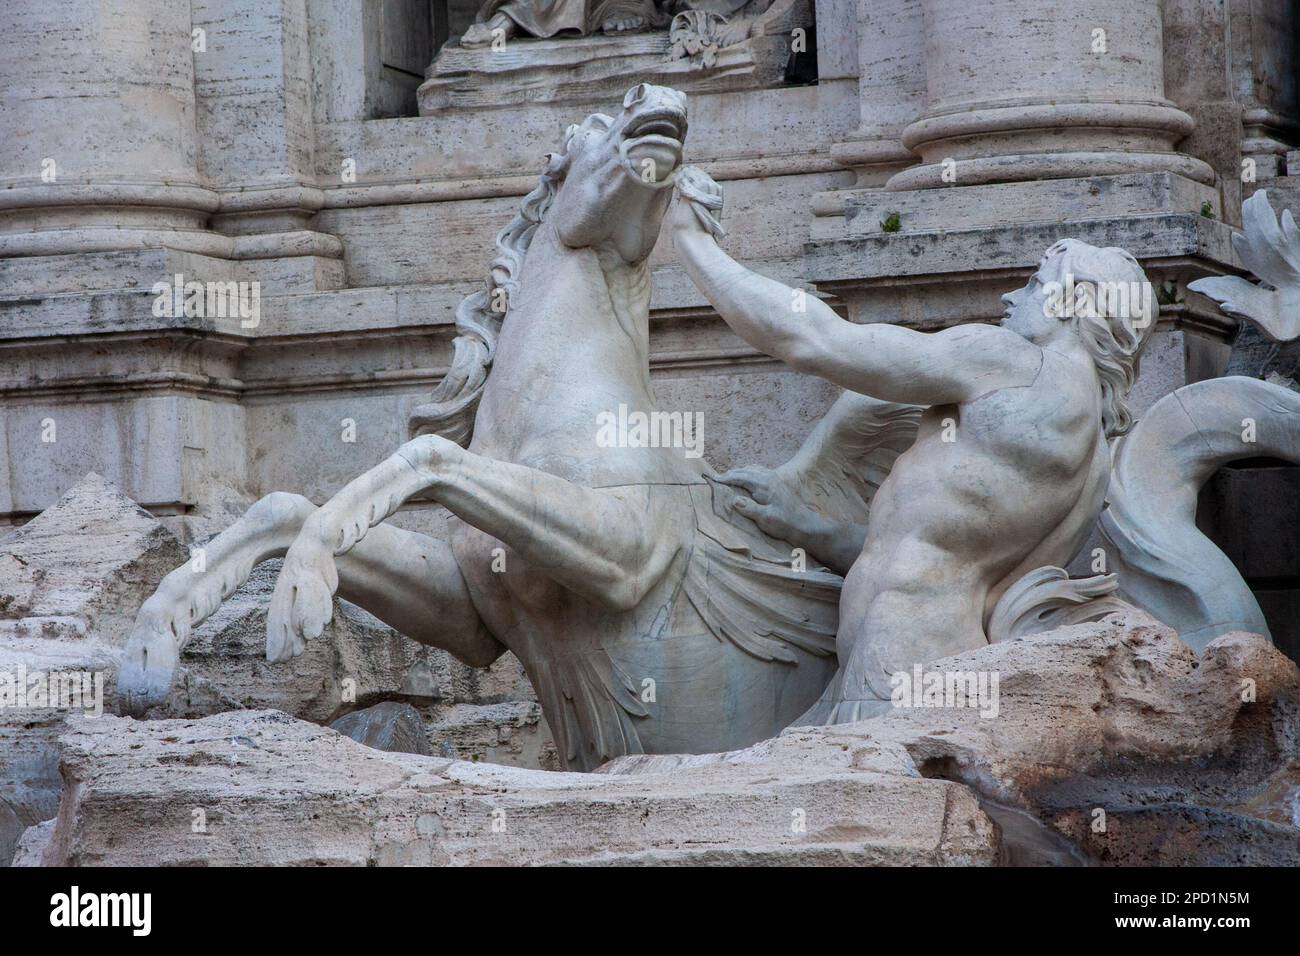 Italie, Rome, Fontana di Trevi conçu et construit par Nicola Salvi, Giuseppe Pannini et Gian Lorenzo Bernini Banque D'Images